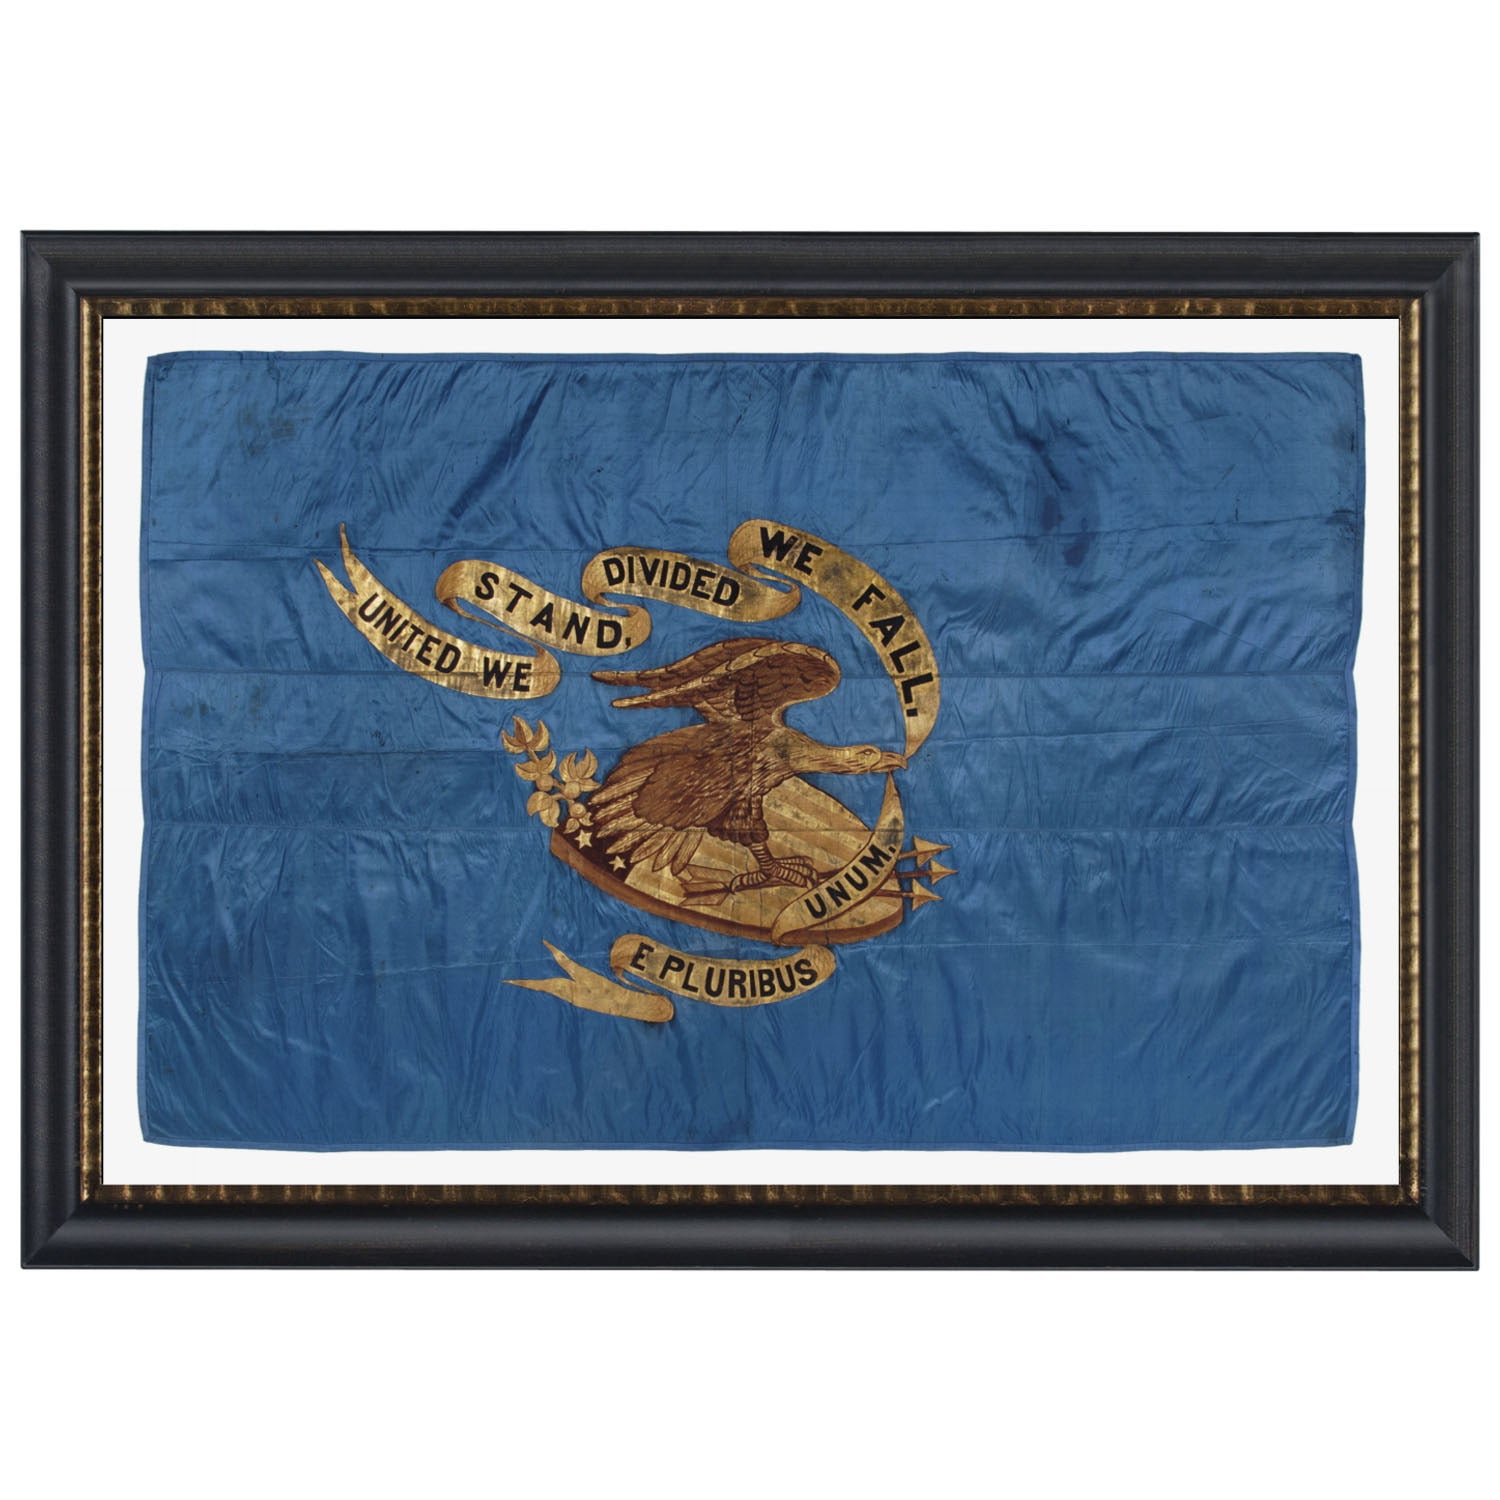 Civil War Regimental Flag with a Dramatic Wartime Eagle